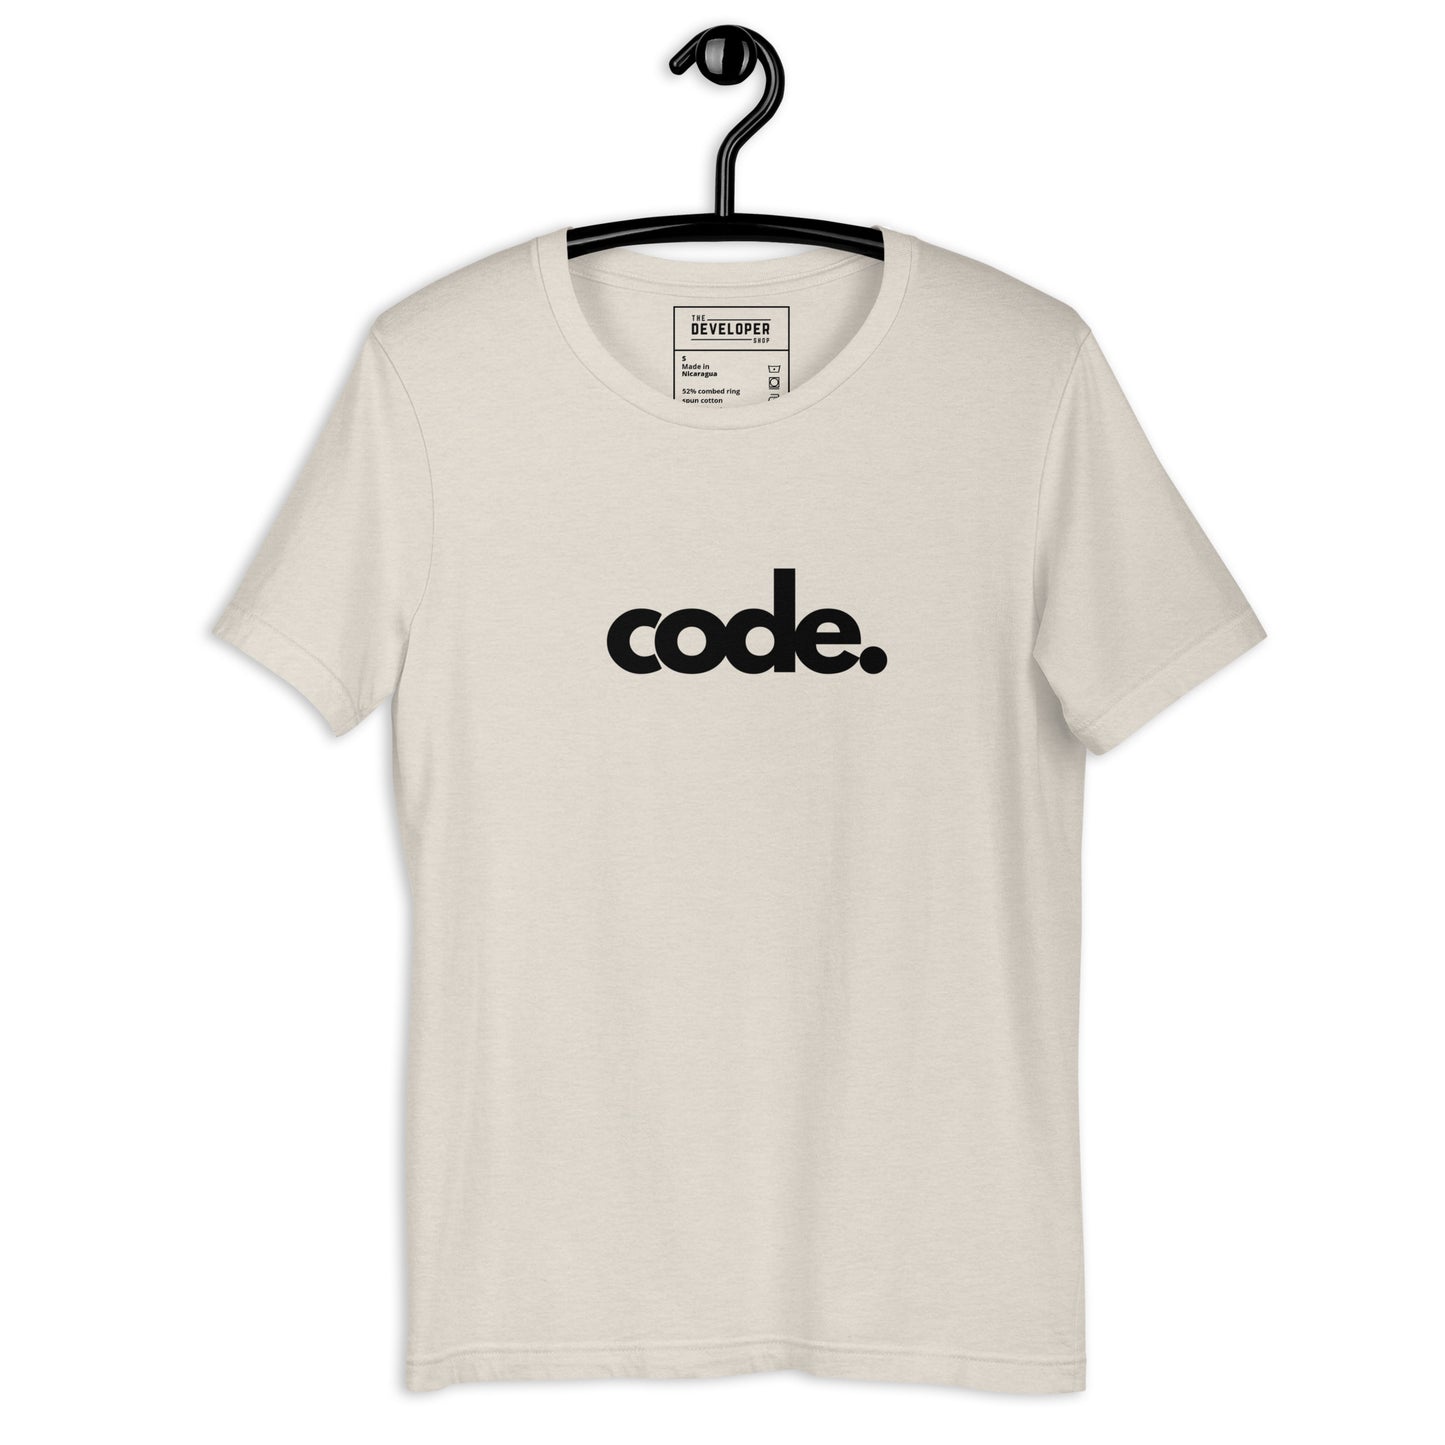 "CODE." Premium Unisex T-Shirt The Developer Shop